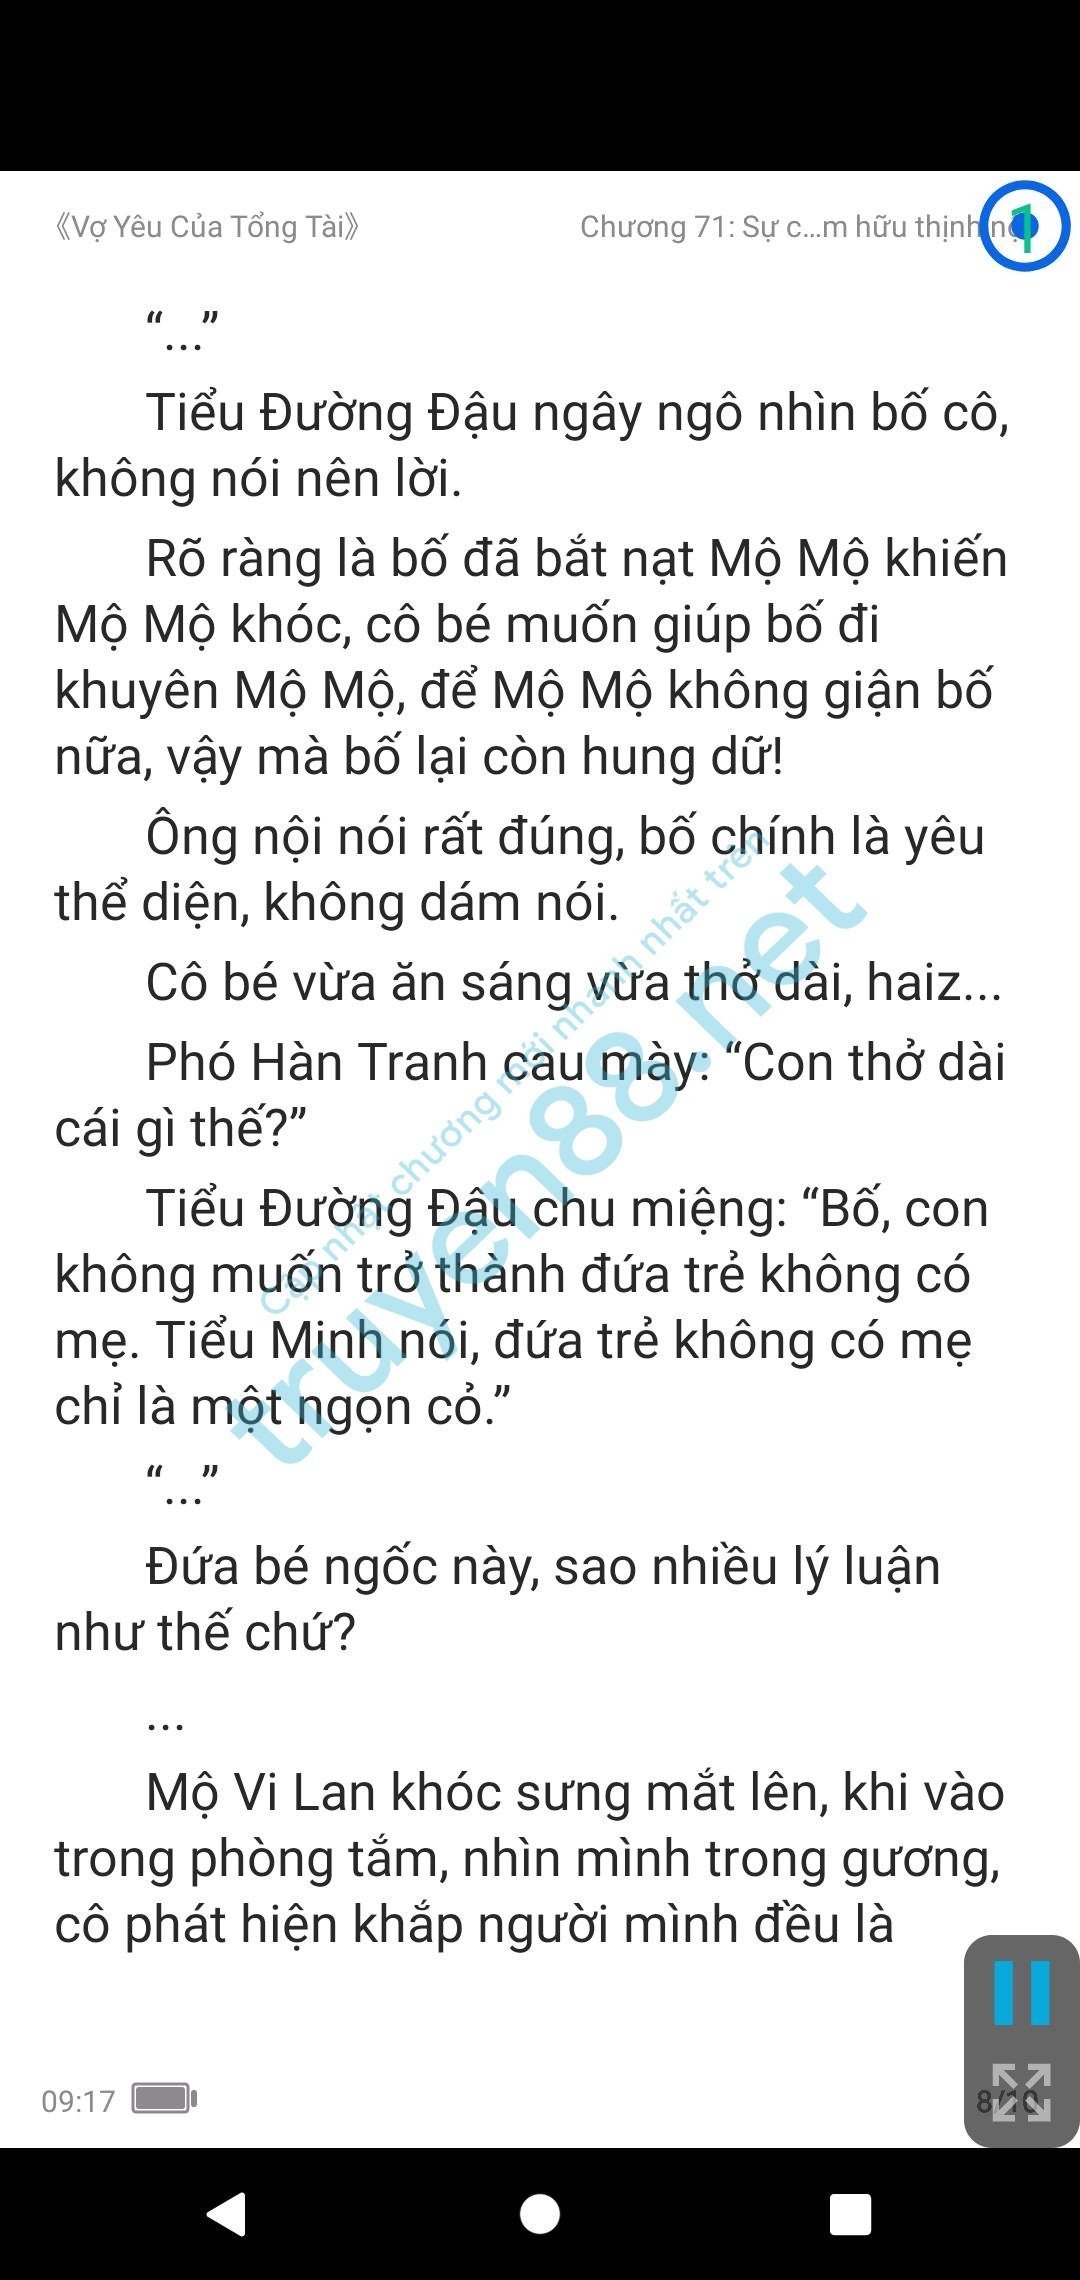 vo-yeu-cua-tong-tai-mo-vi-lan--pho-han-tranh-71-0